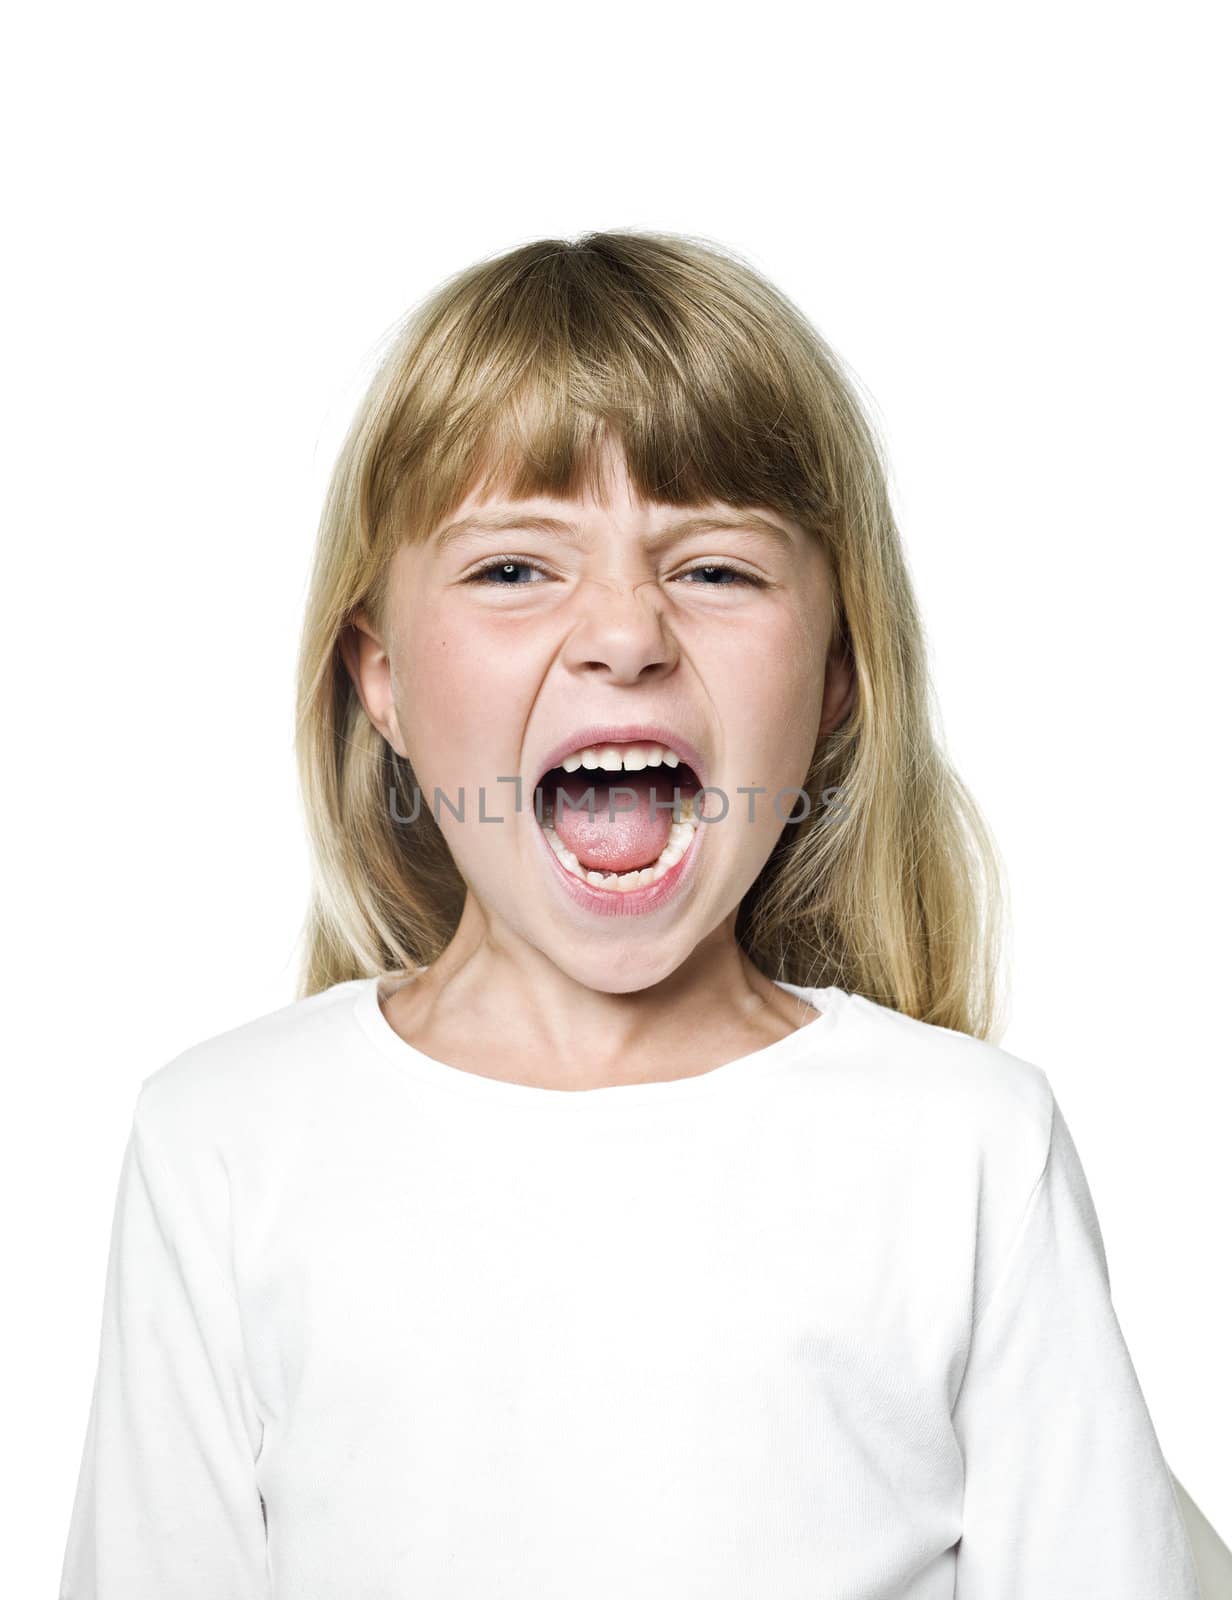 Screaming Girl by gemenacom